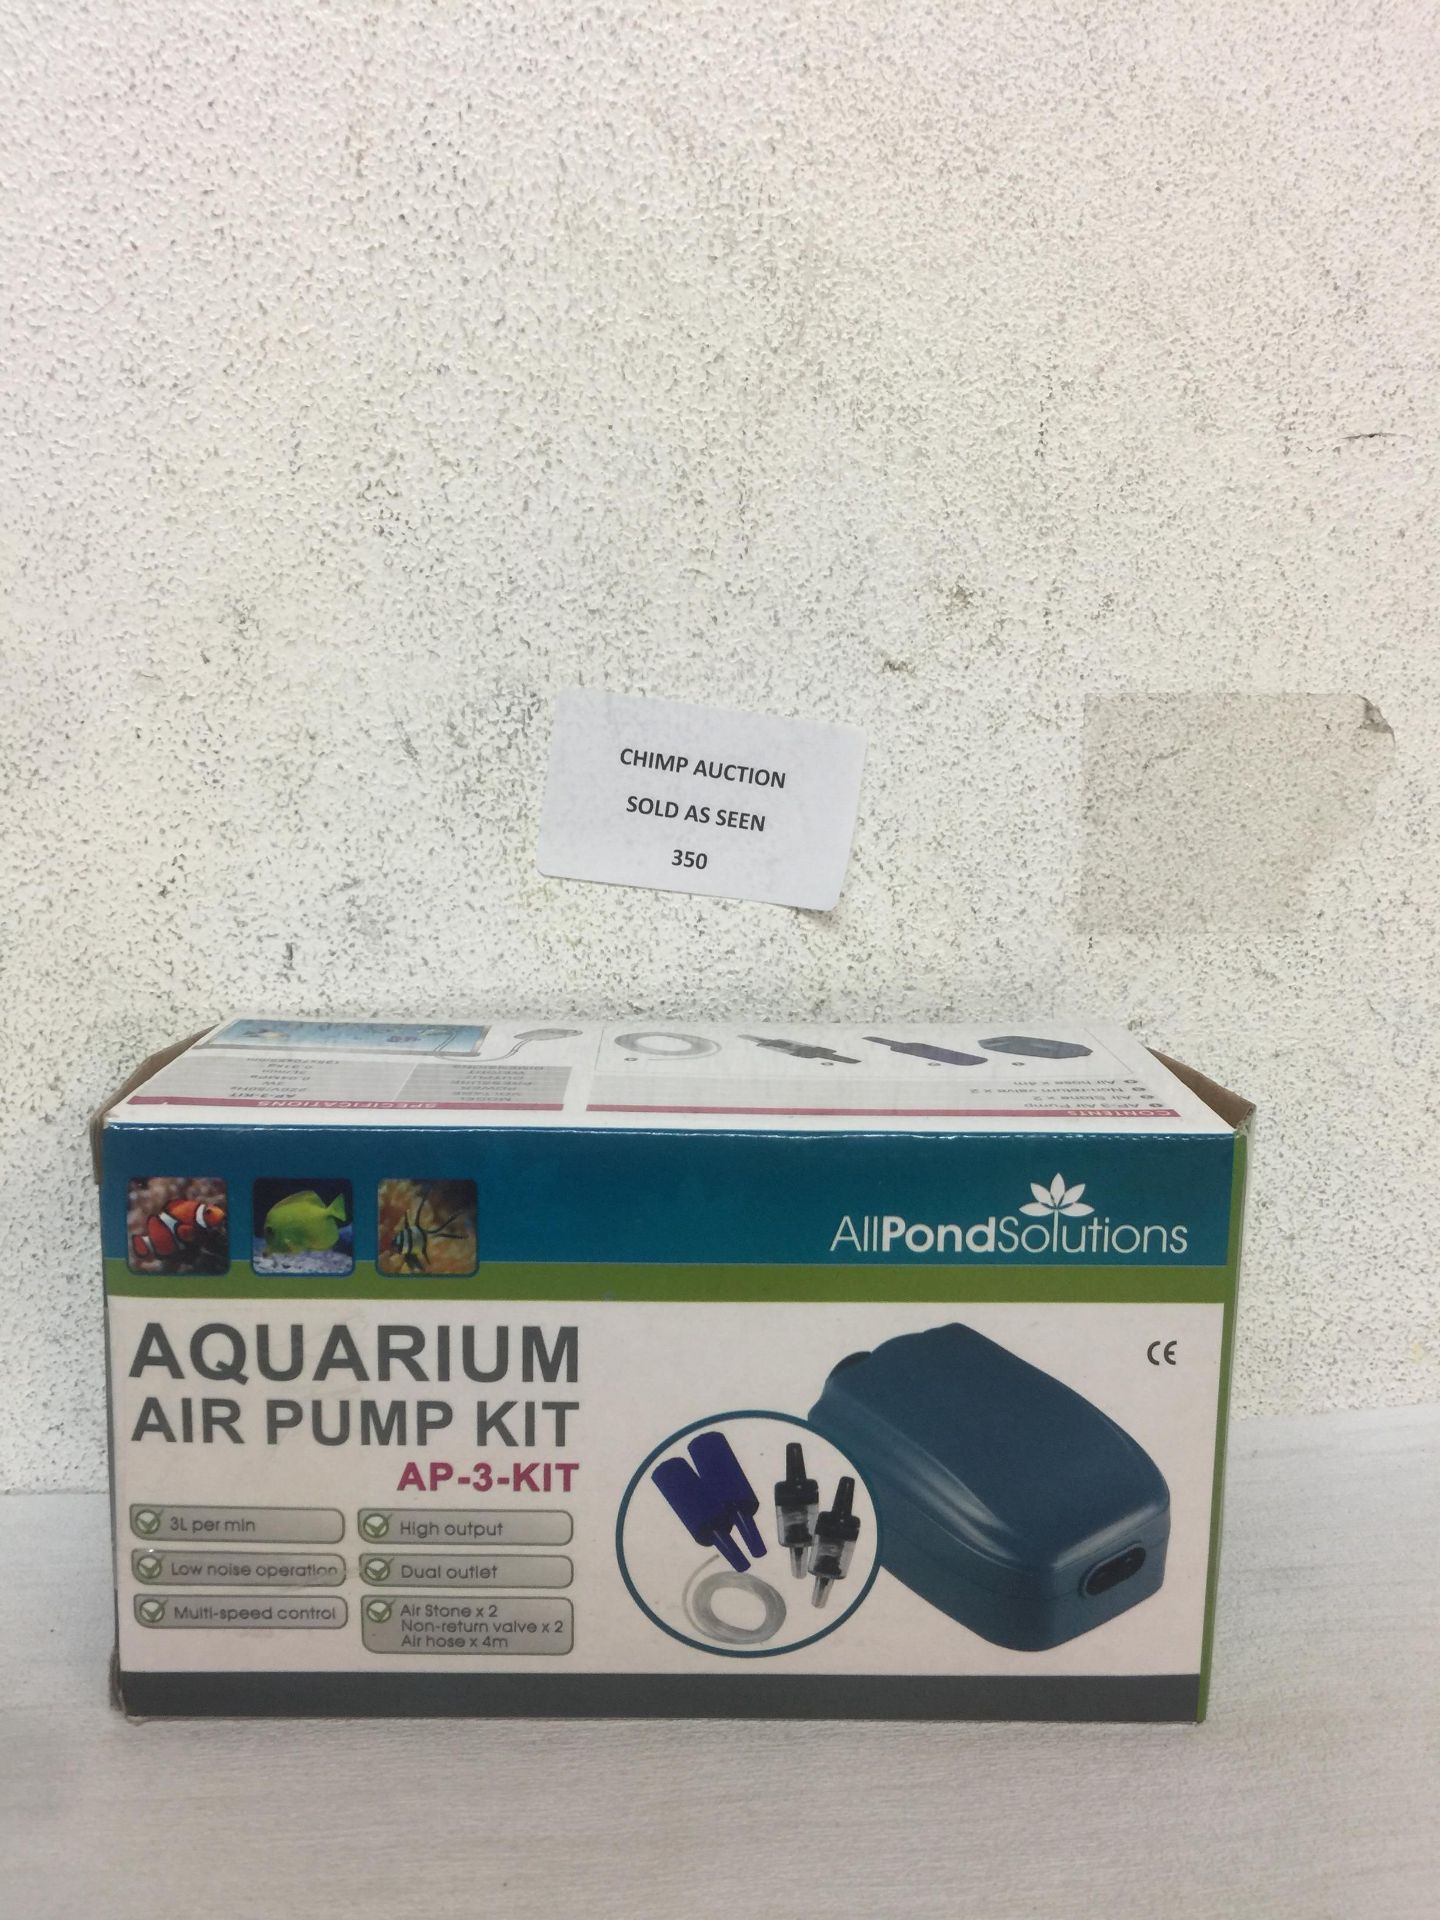 All Pond Solutions Aquarium Air Pump Kit